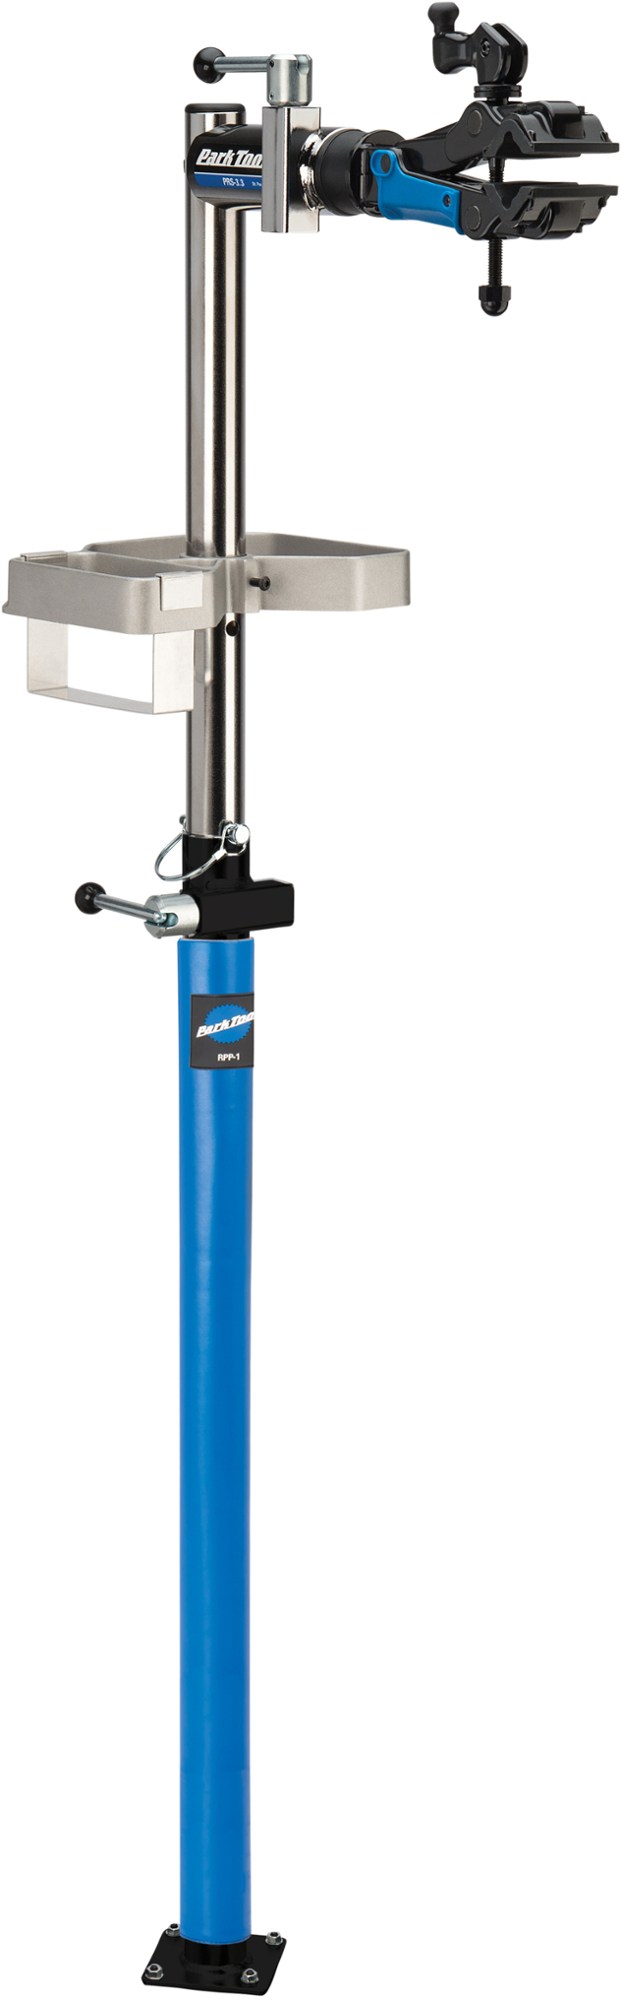 PRS-3.3-2 Ремонтный стенд Deluxe с одним кронштейном Park Tool, синий liposuction toomey 10cc 20cc 50cc syringe locks single arm liposuction tool